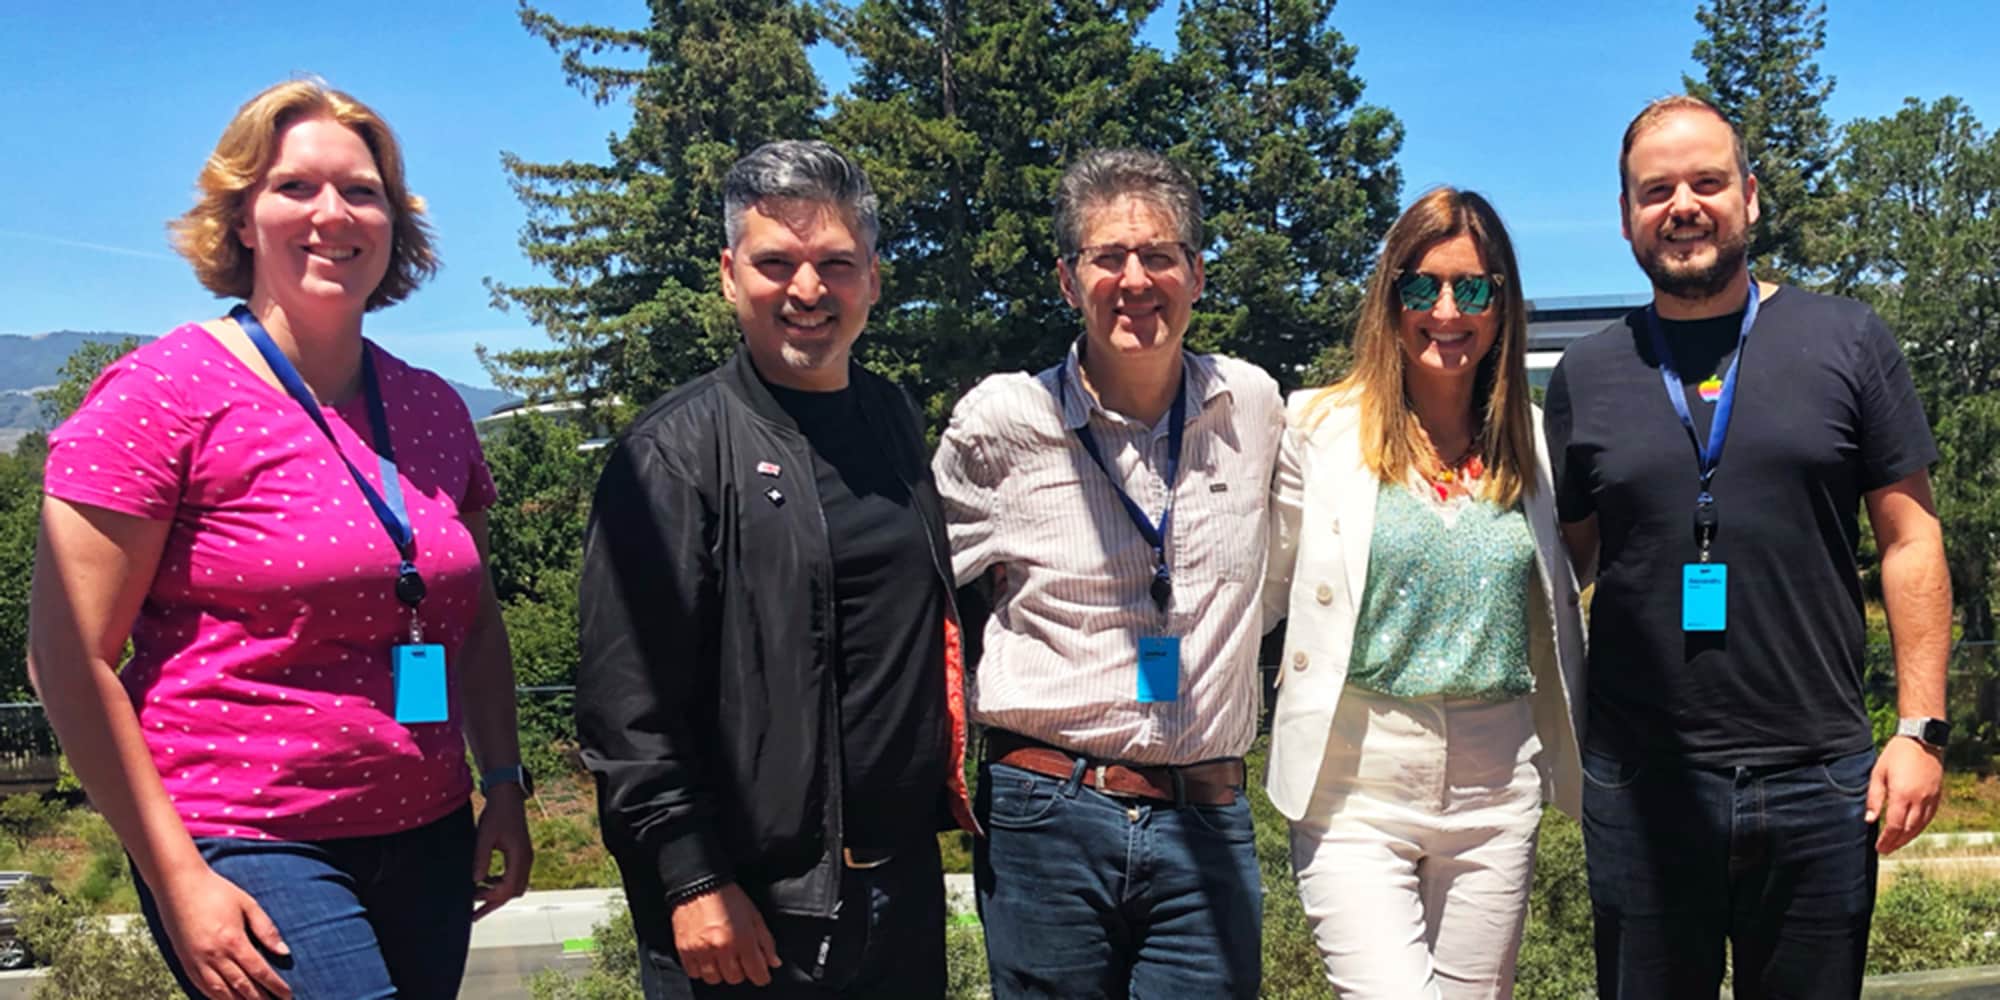 The Deloitte Digital crew at WWDC 2019